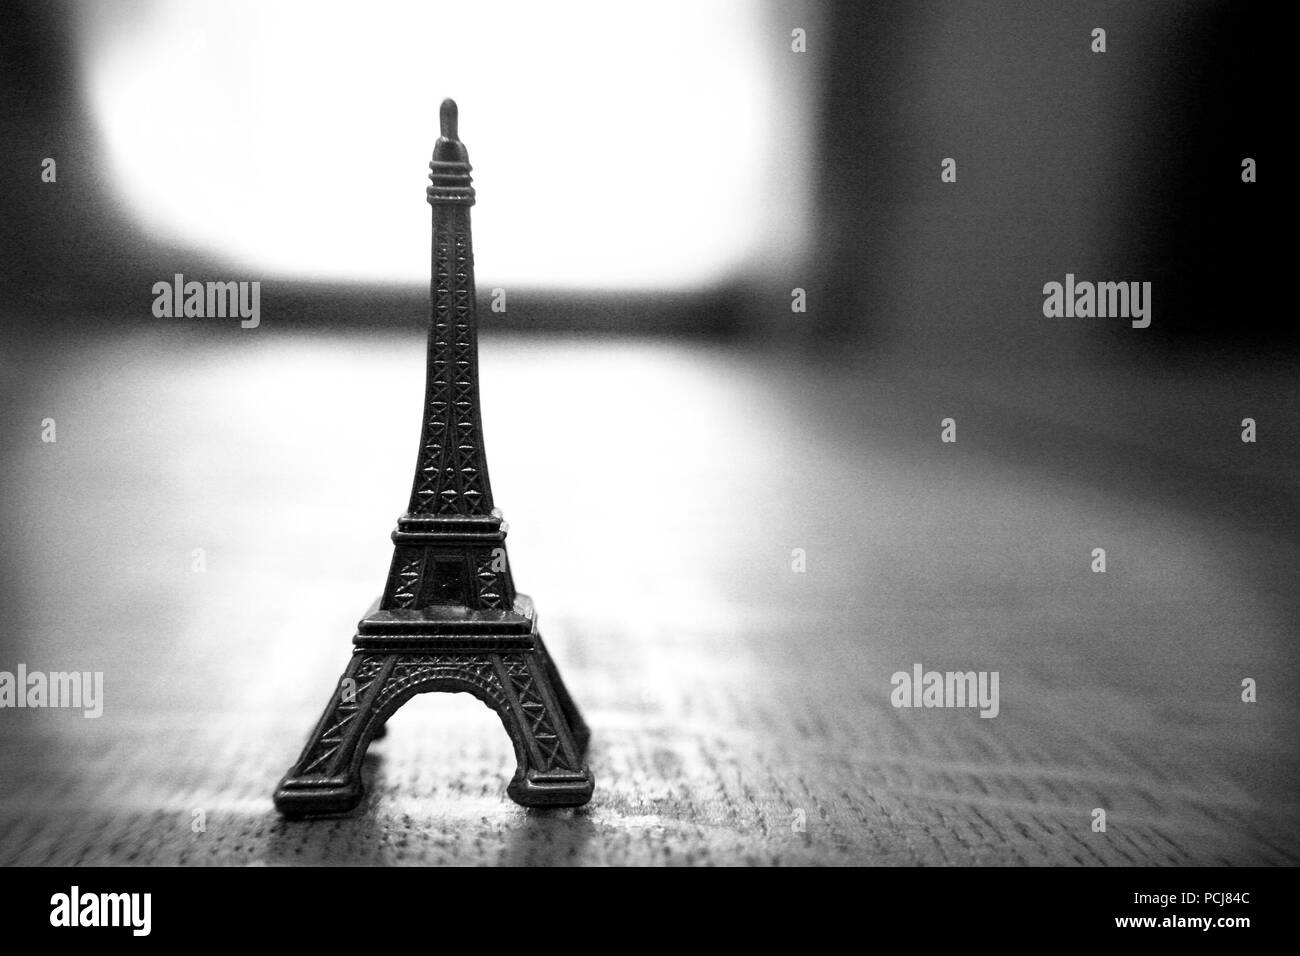 Model of the Eiffel Tower tiny macro image Stock Photo